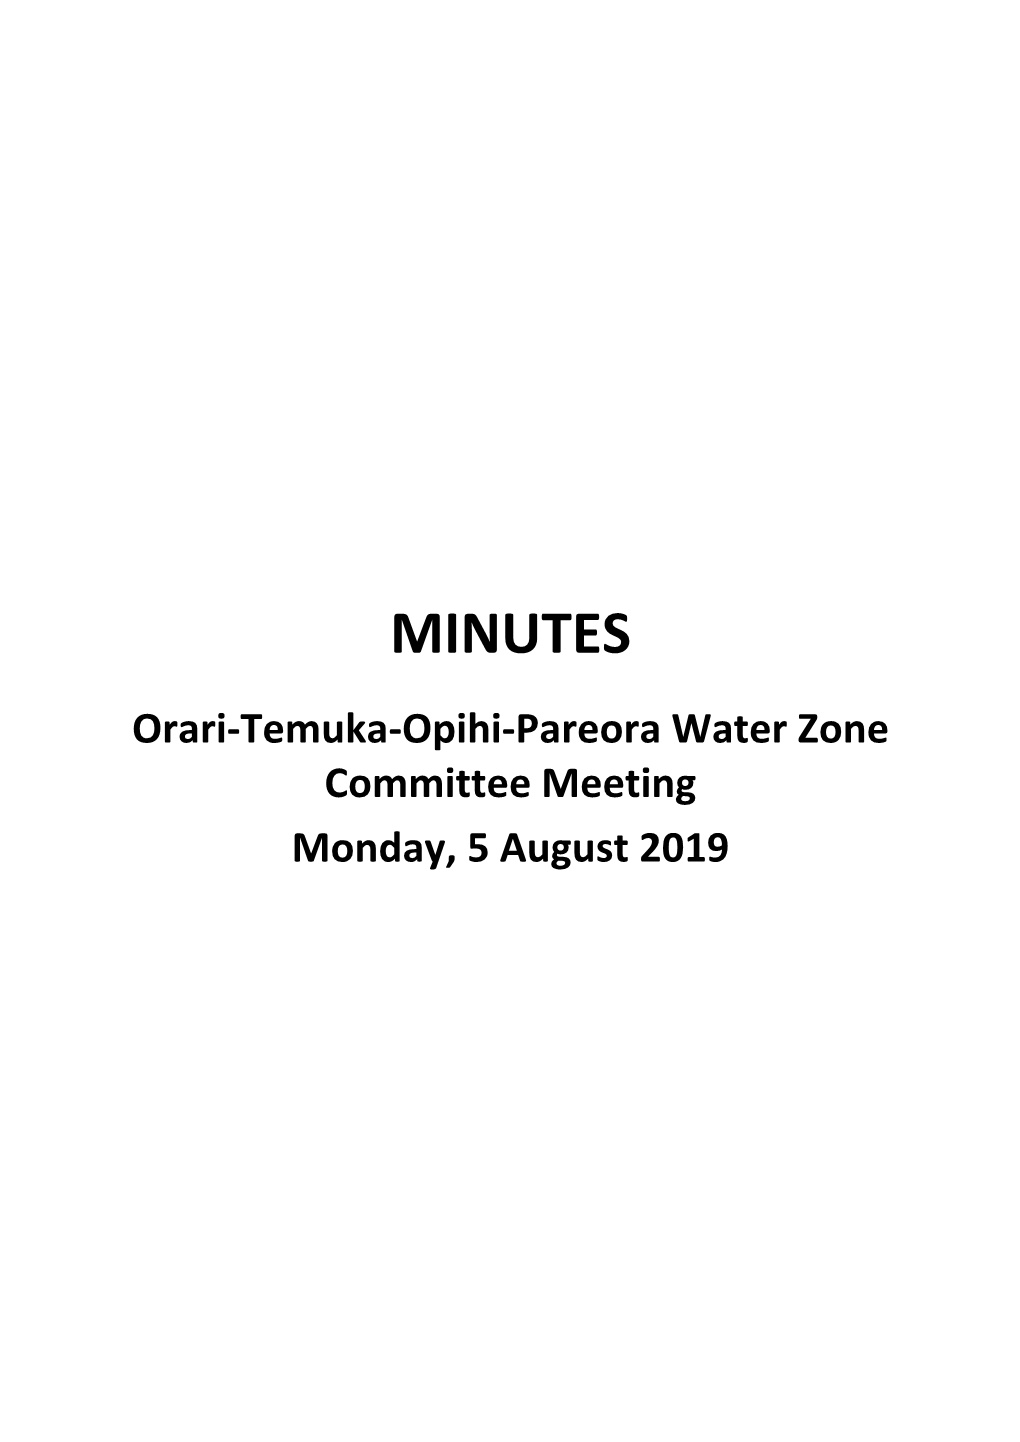 Minutes of Orari-Temuka-Opihi-Pareora Water Zone Committee Meeting